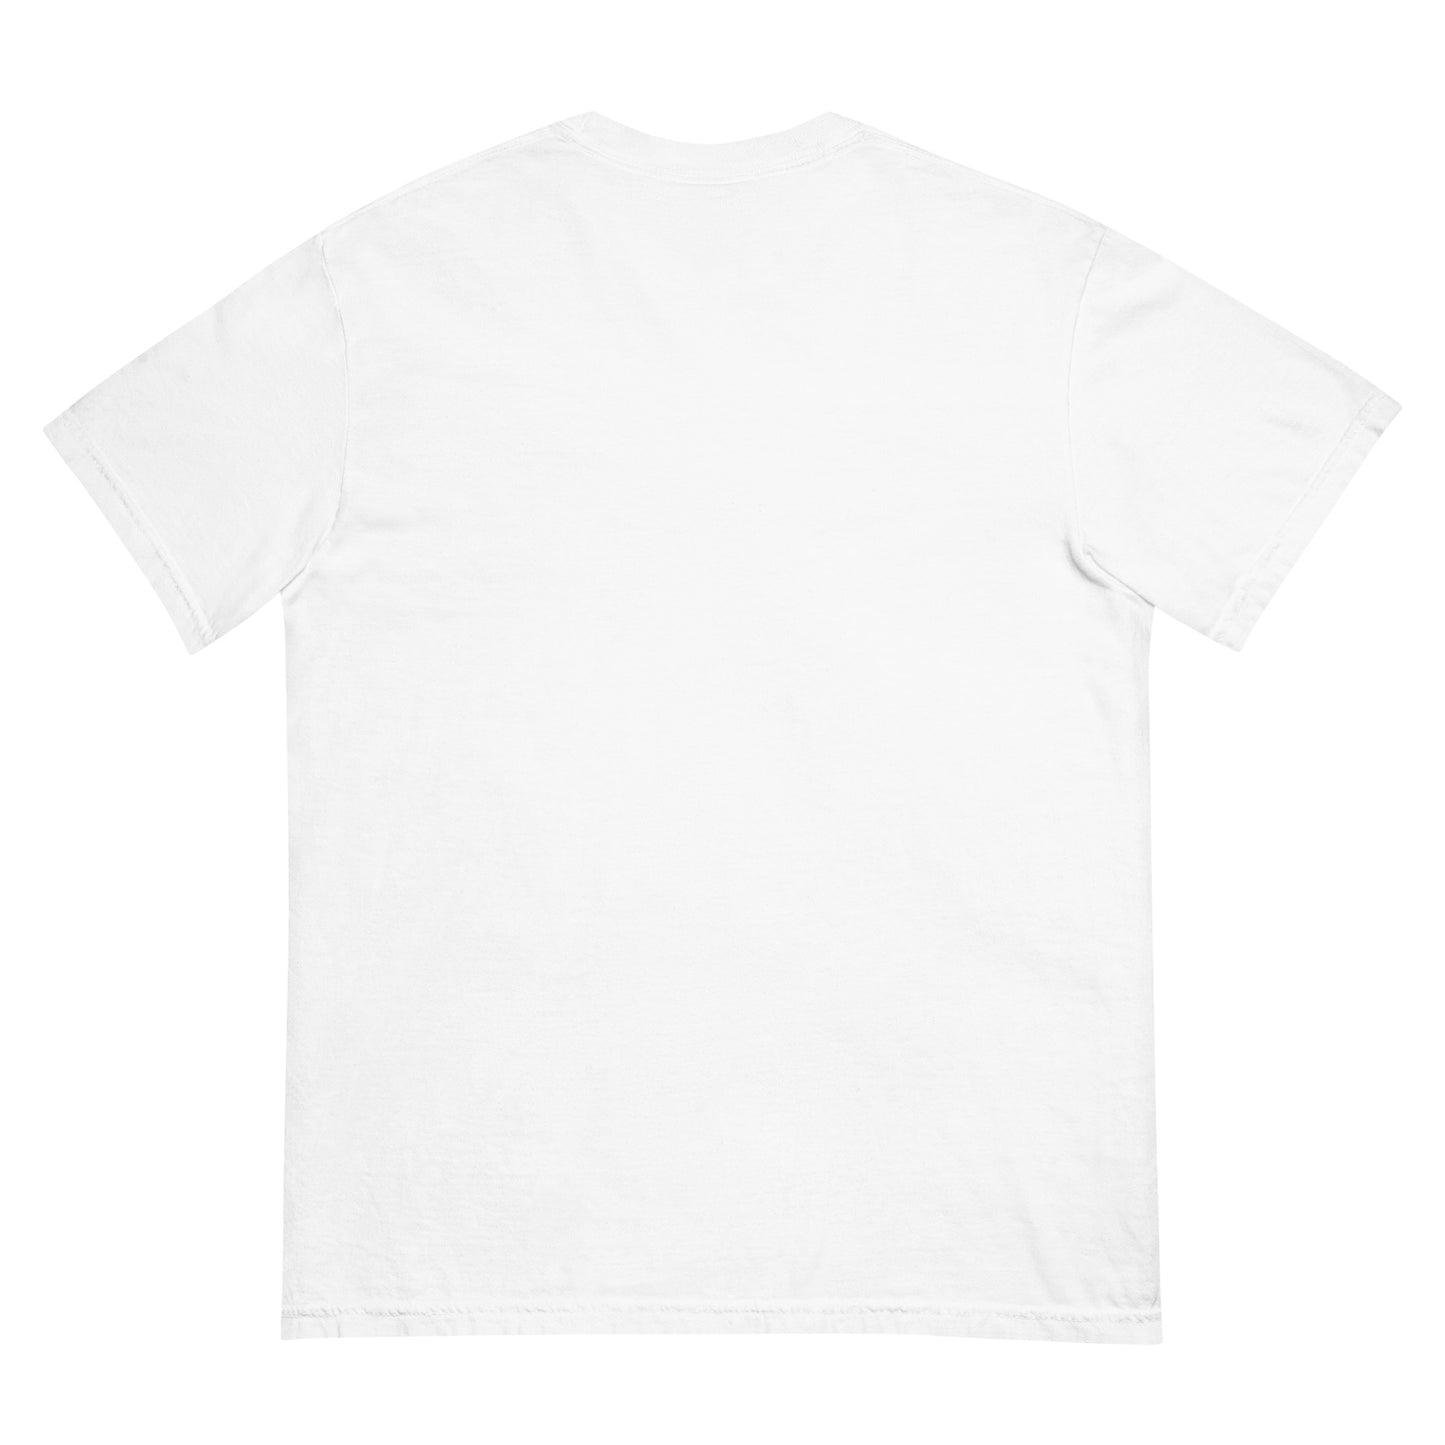 Jones/Haggard '24 T-Shirt